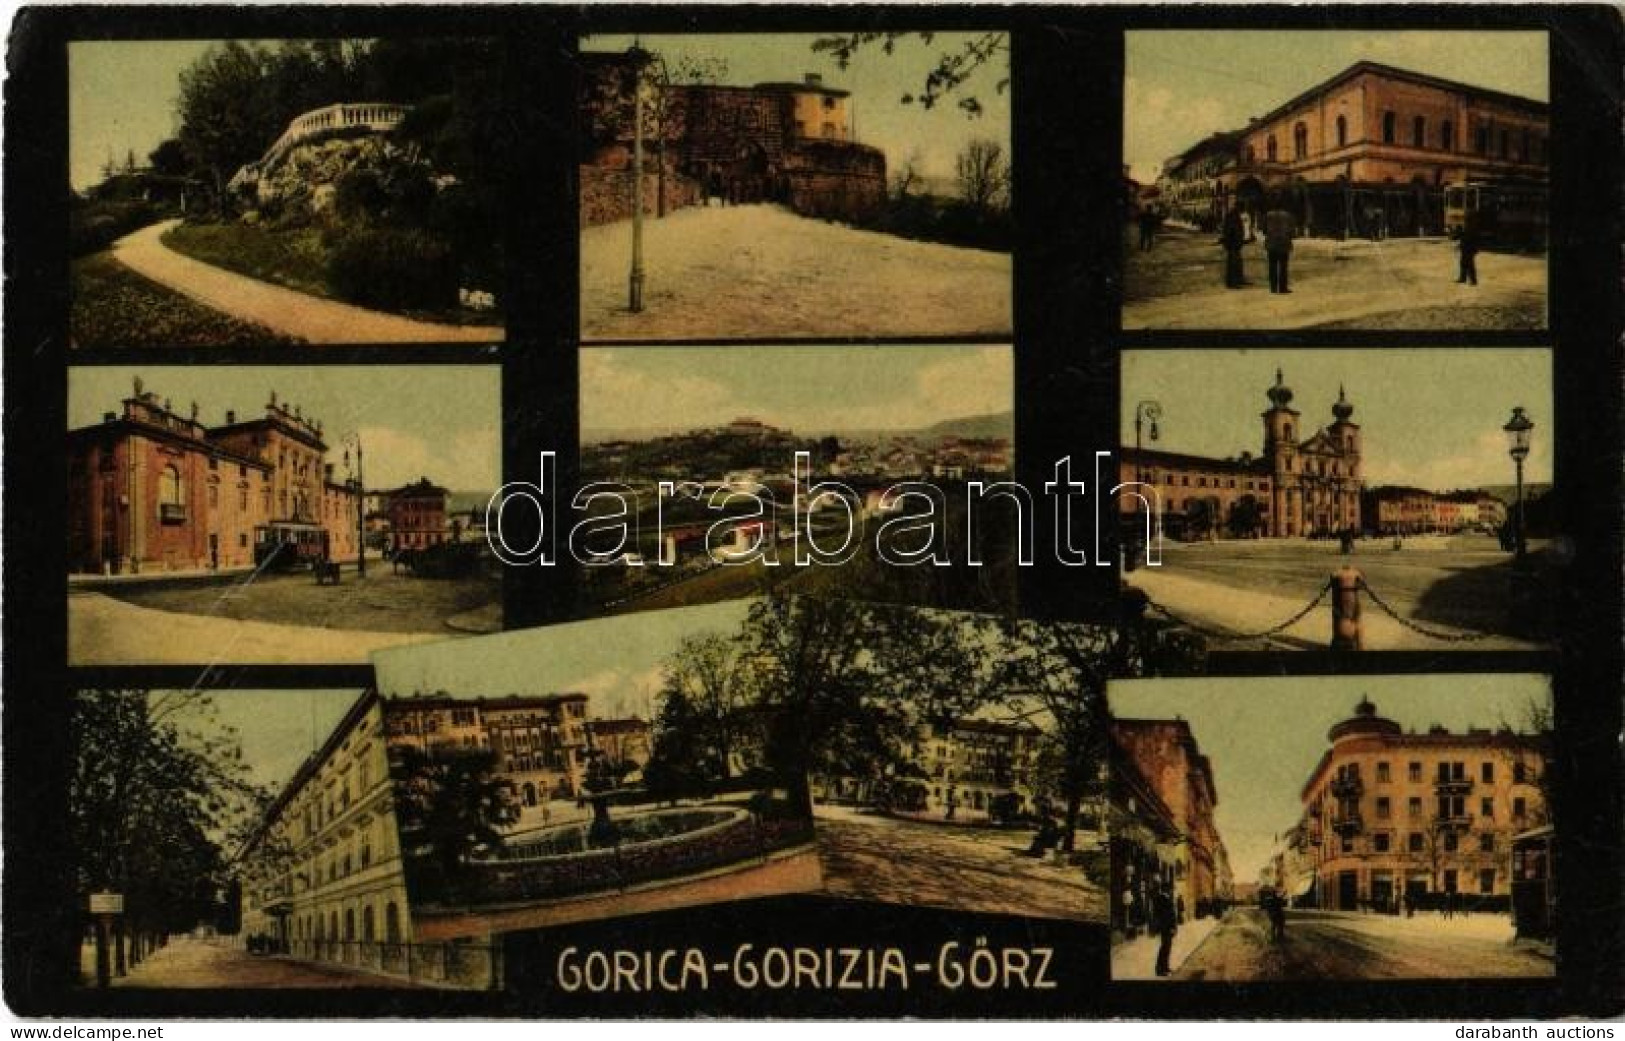 T2/T3 1915 Gorizia, Görz, Gorica; Multi-view Postcard, Street Views With Tram, Railway Station, Cathedral, Castle (EK) - Non Classificati